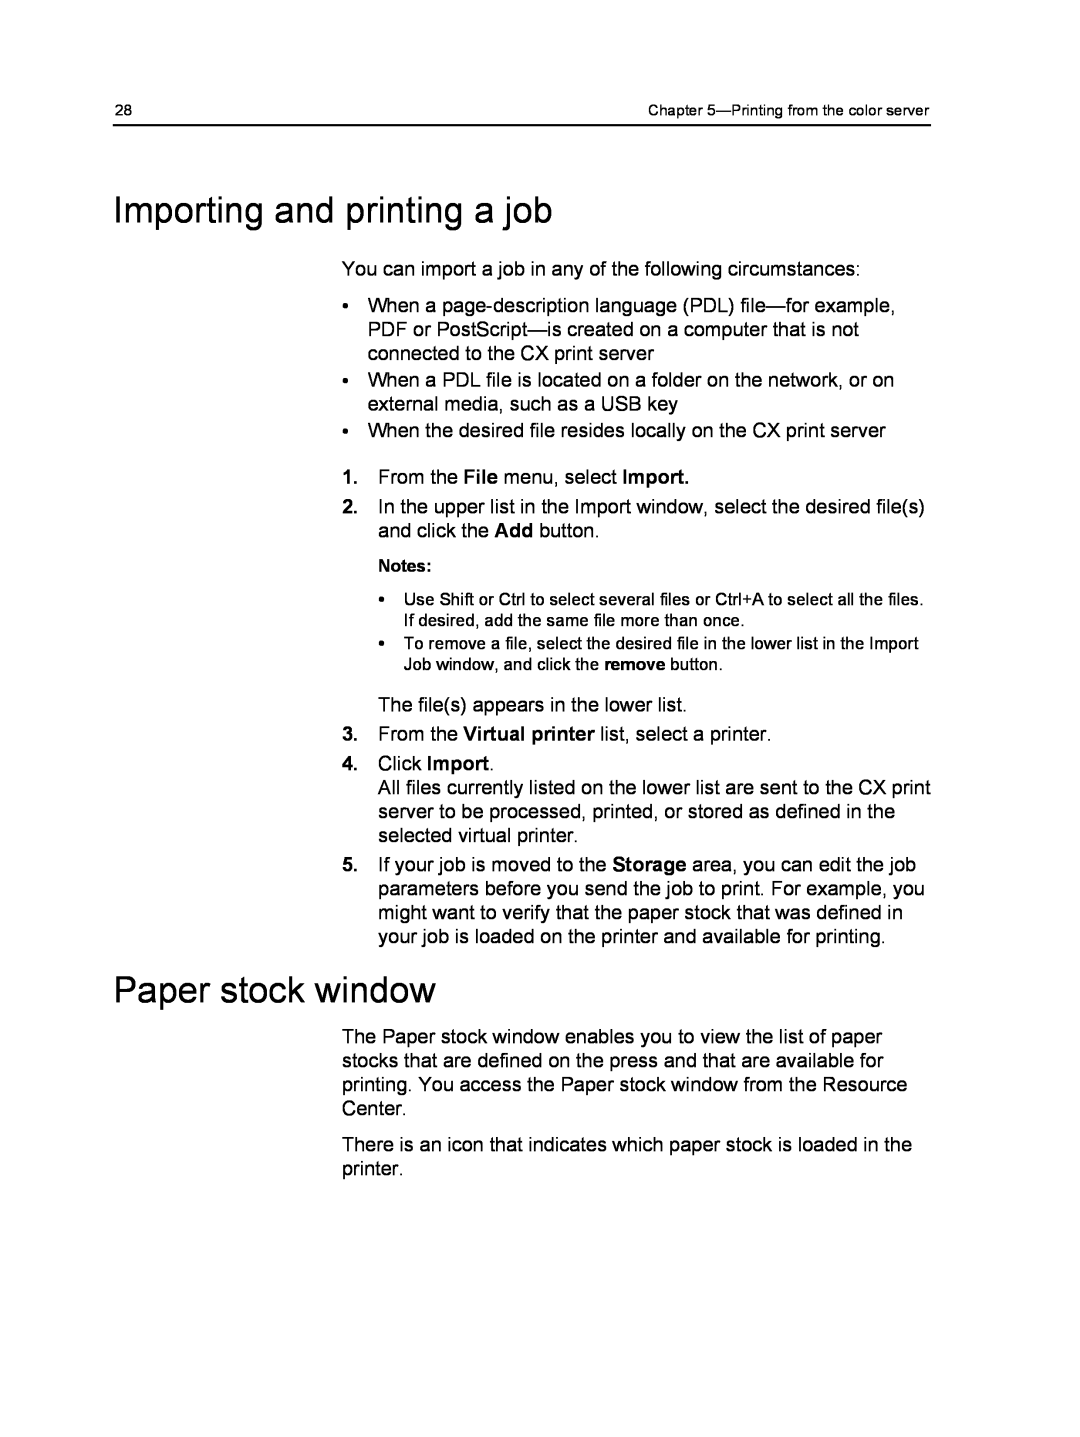 Xerox 560, 550 manual Importing and printing a job, Paper stock window 